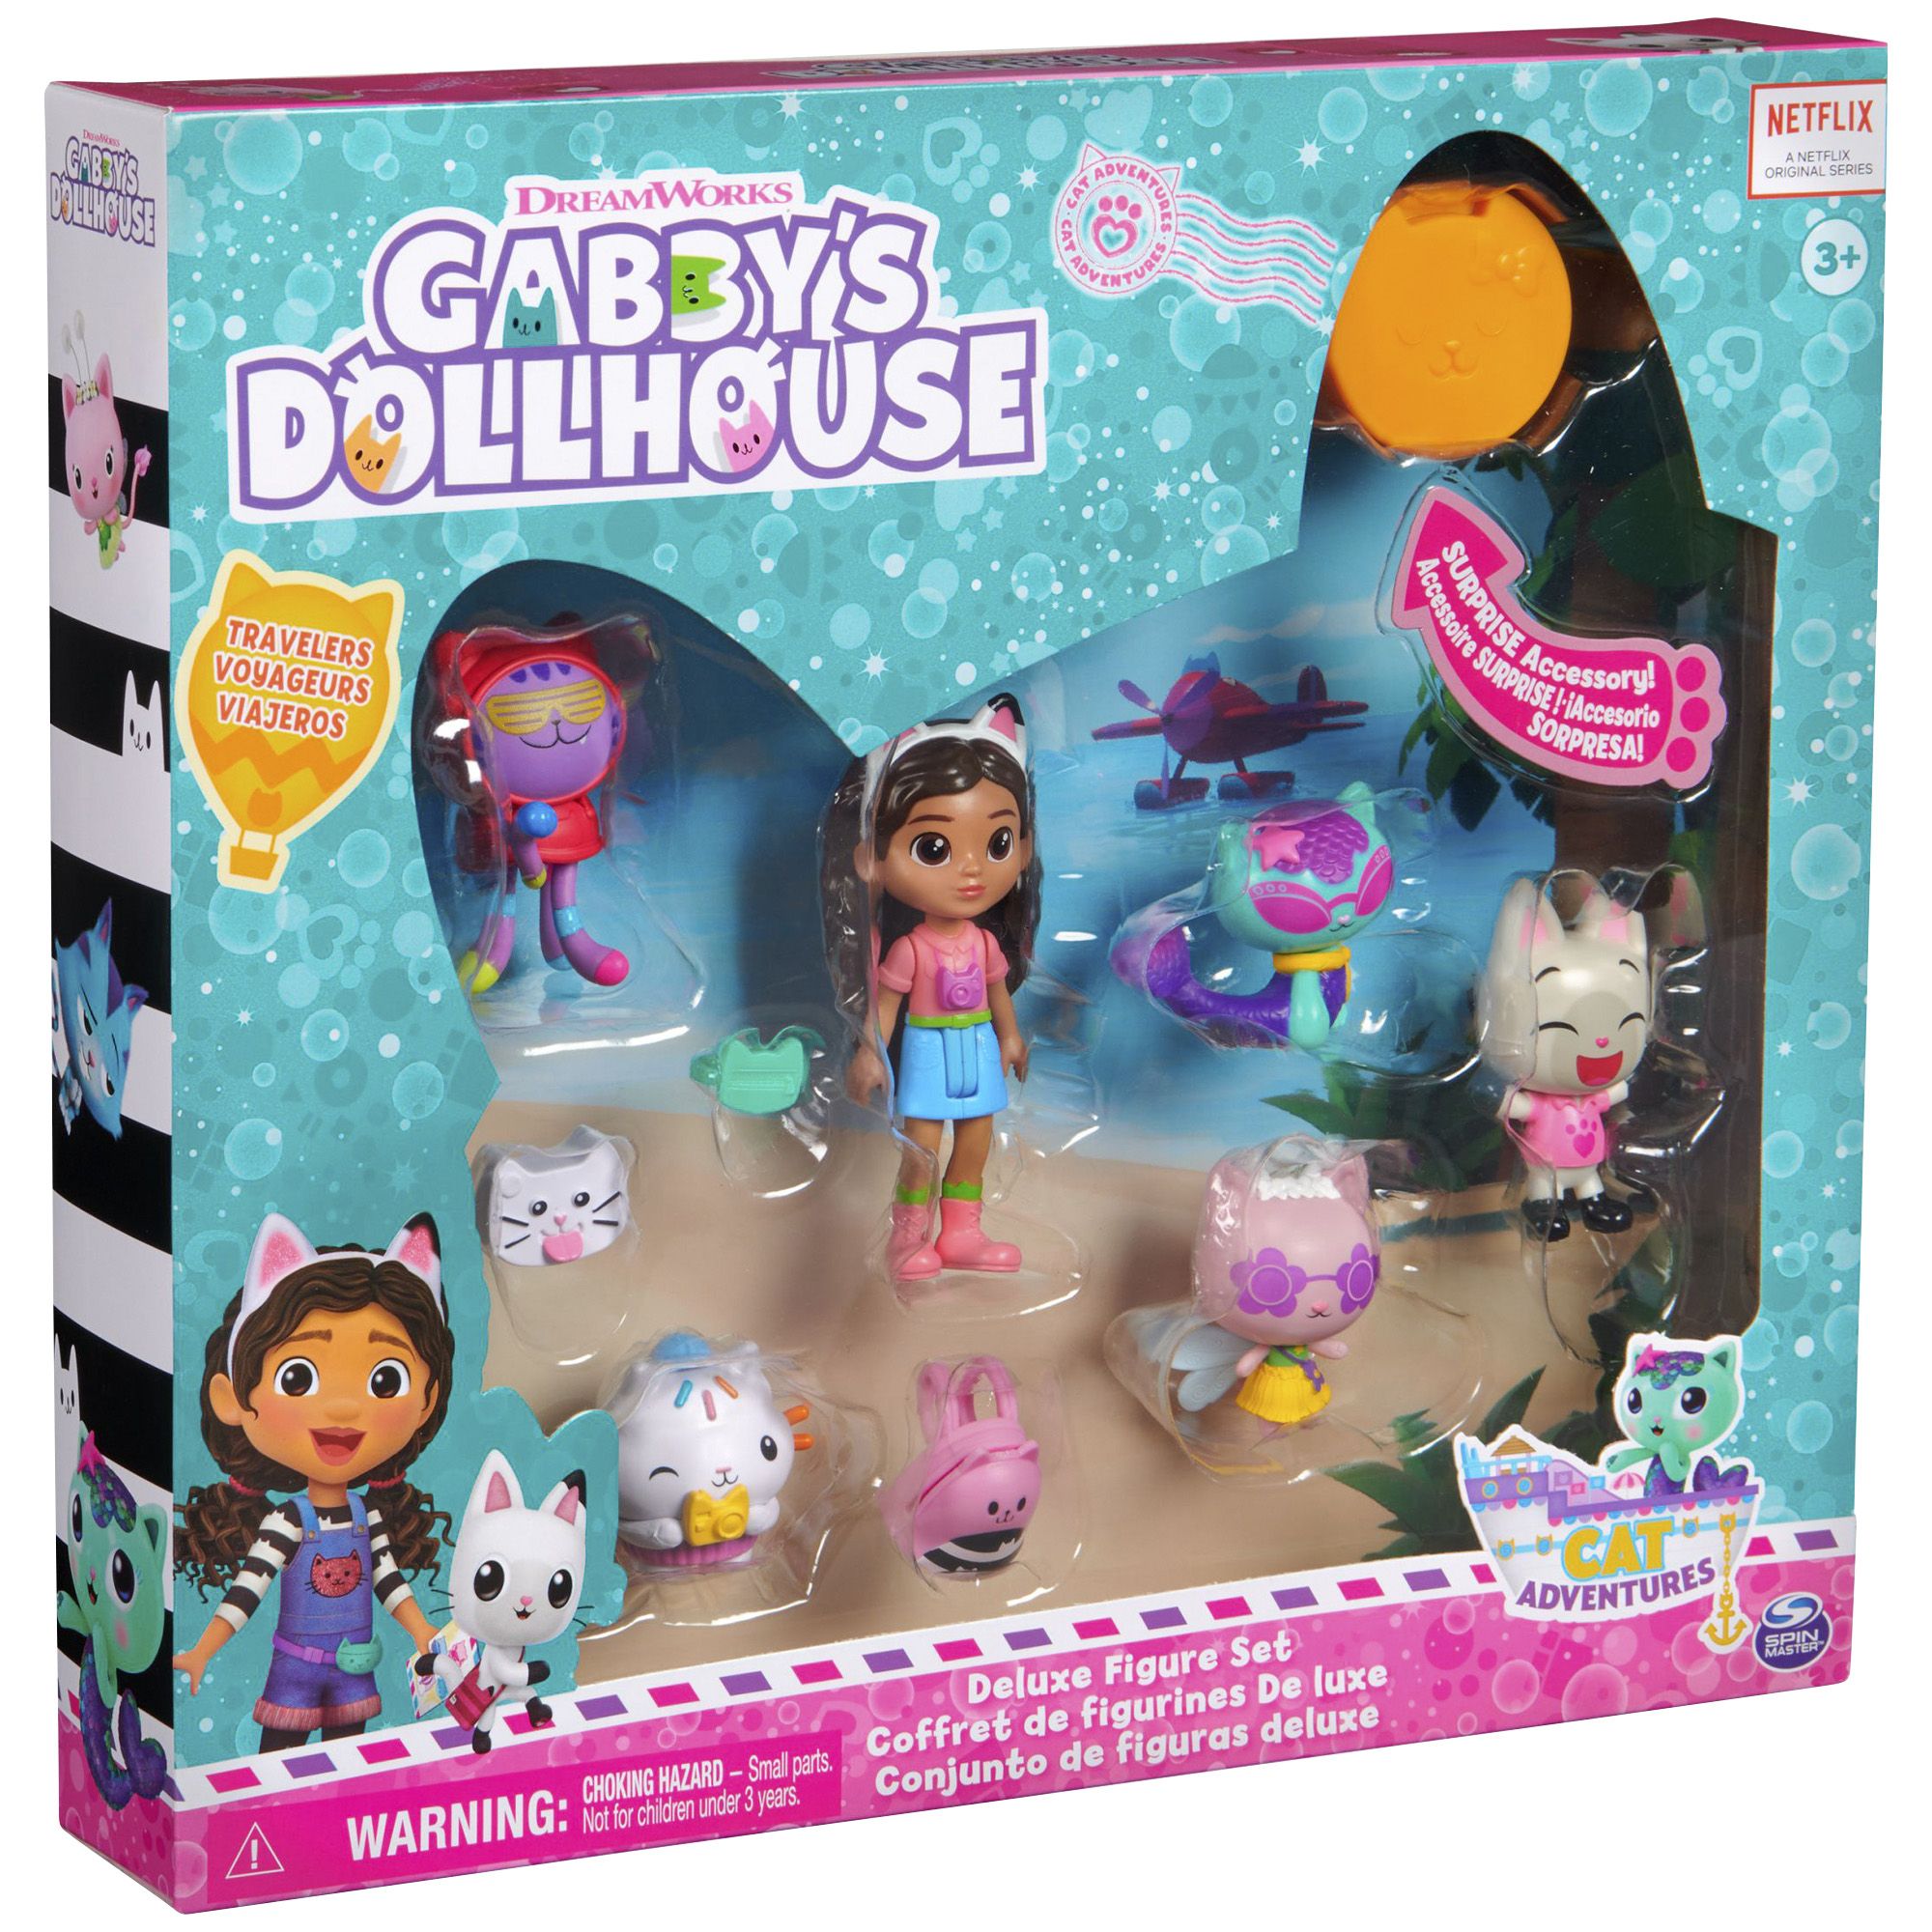 Fingerhut - Gabby's Dollhouse Gabby Cat Friend Ship